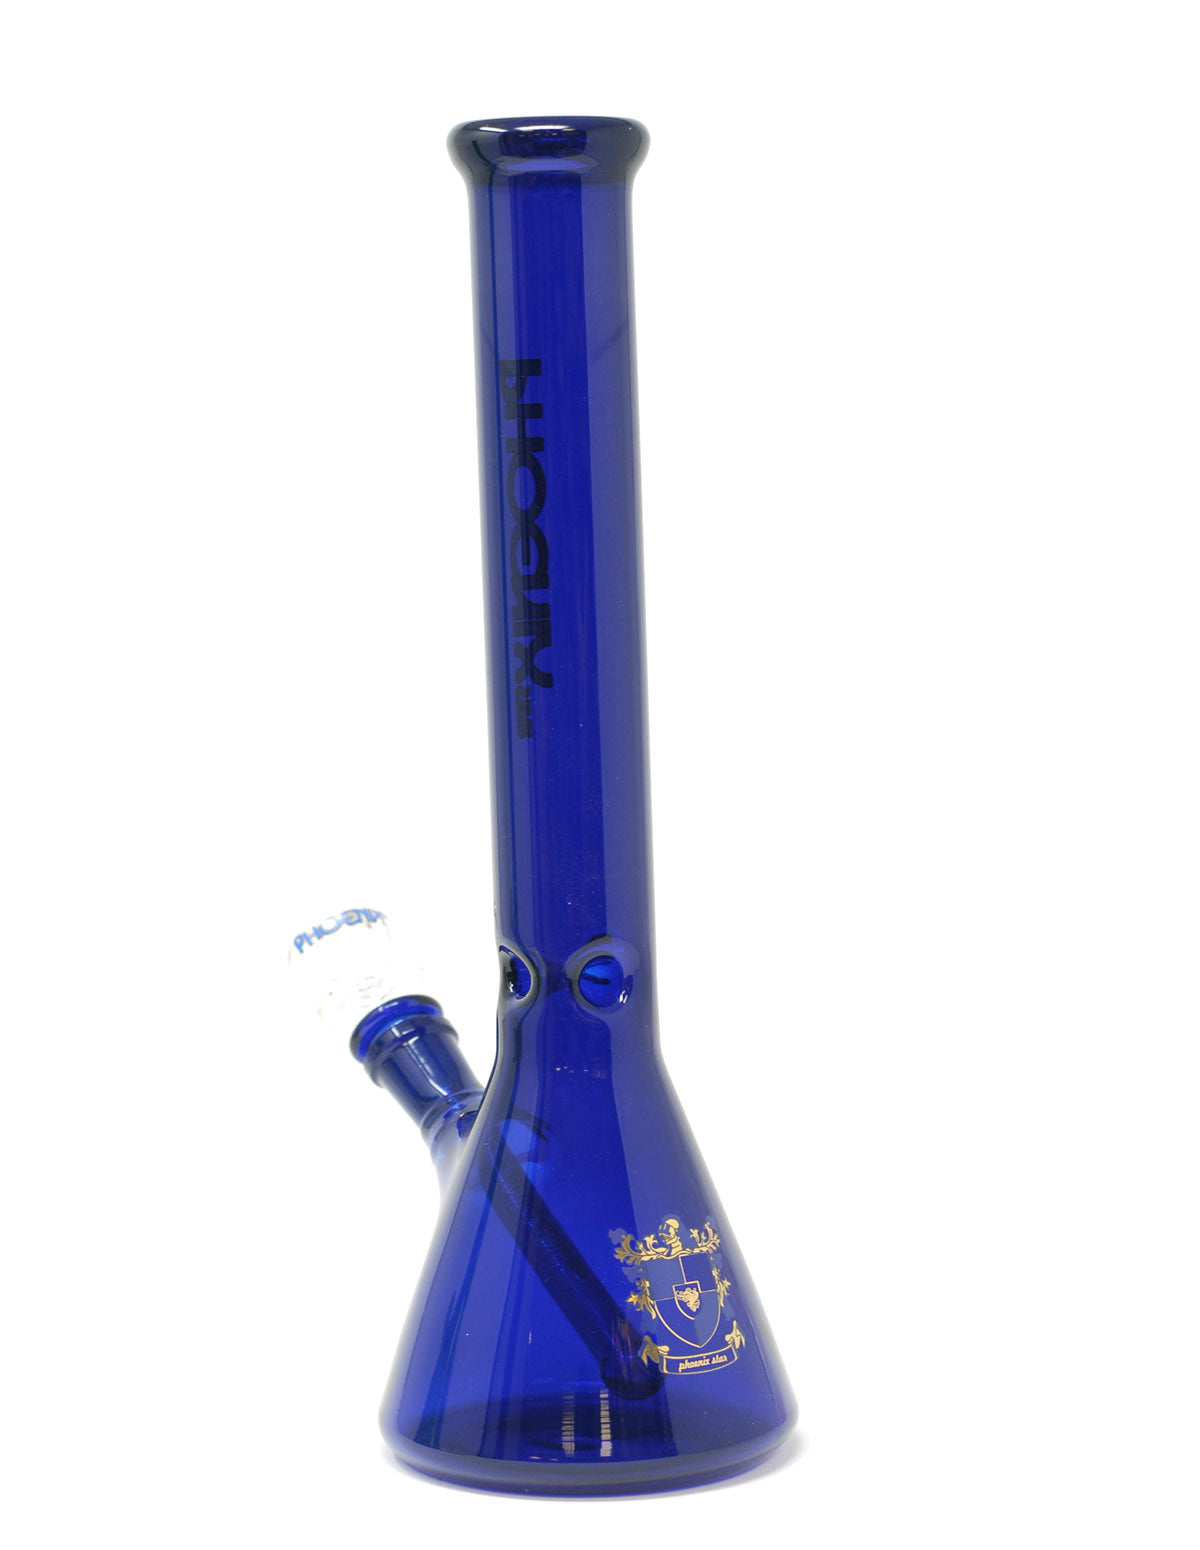 13.5" Beaker Glass Water Pipe